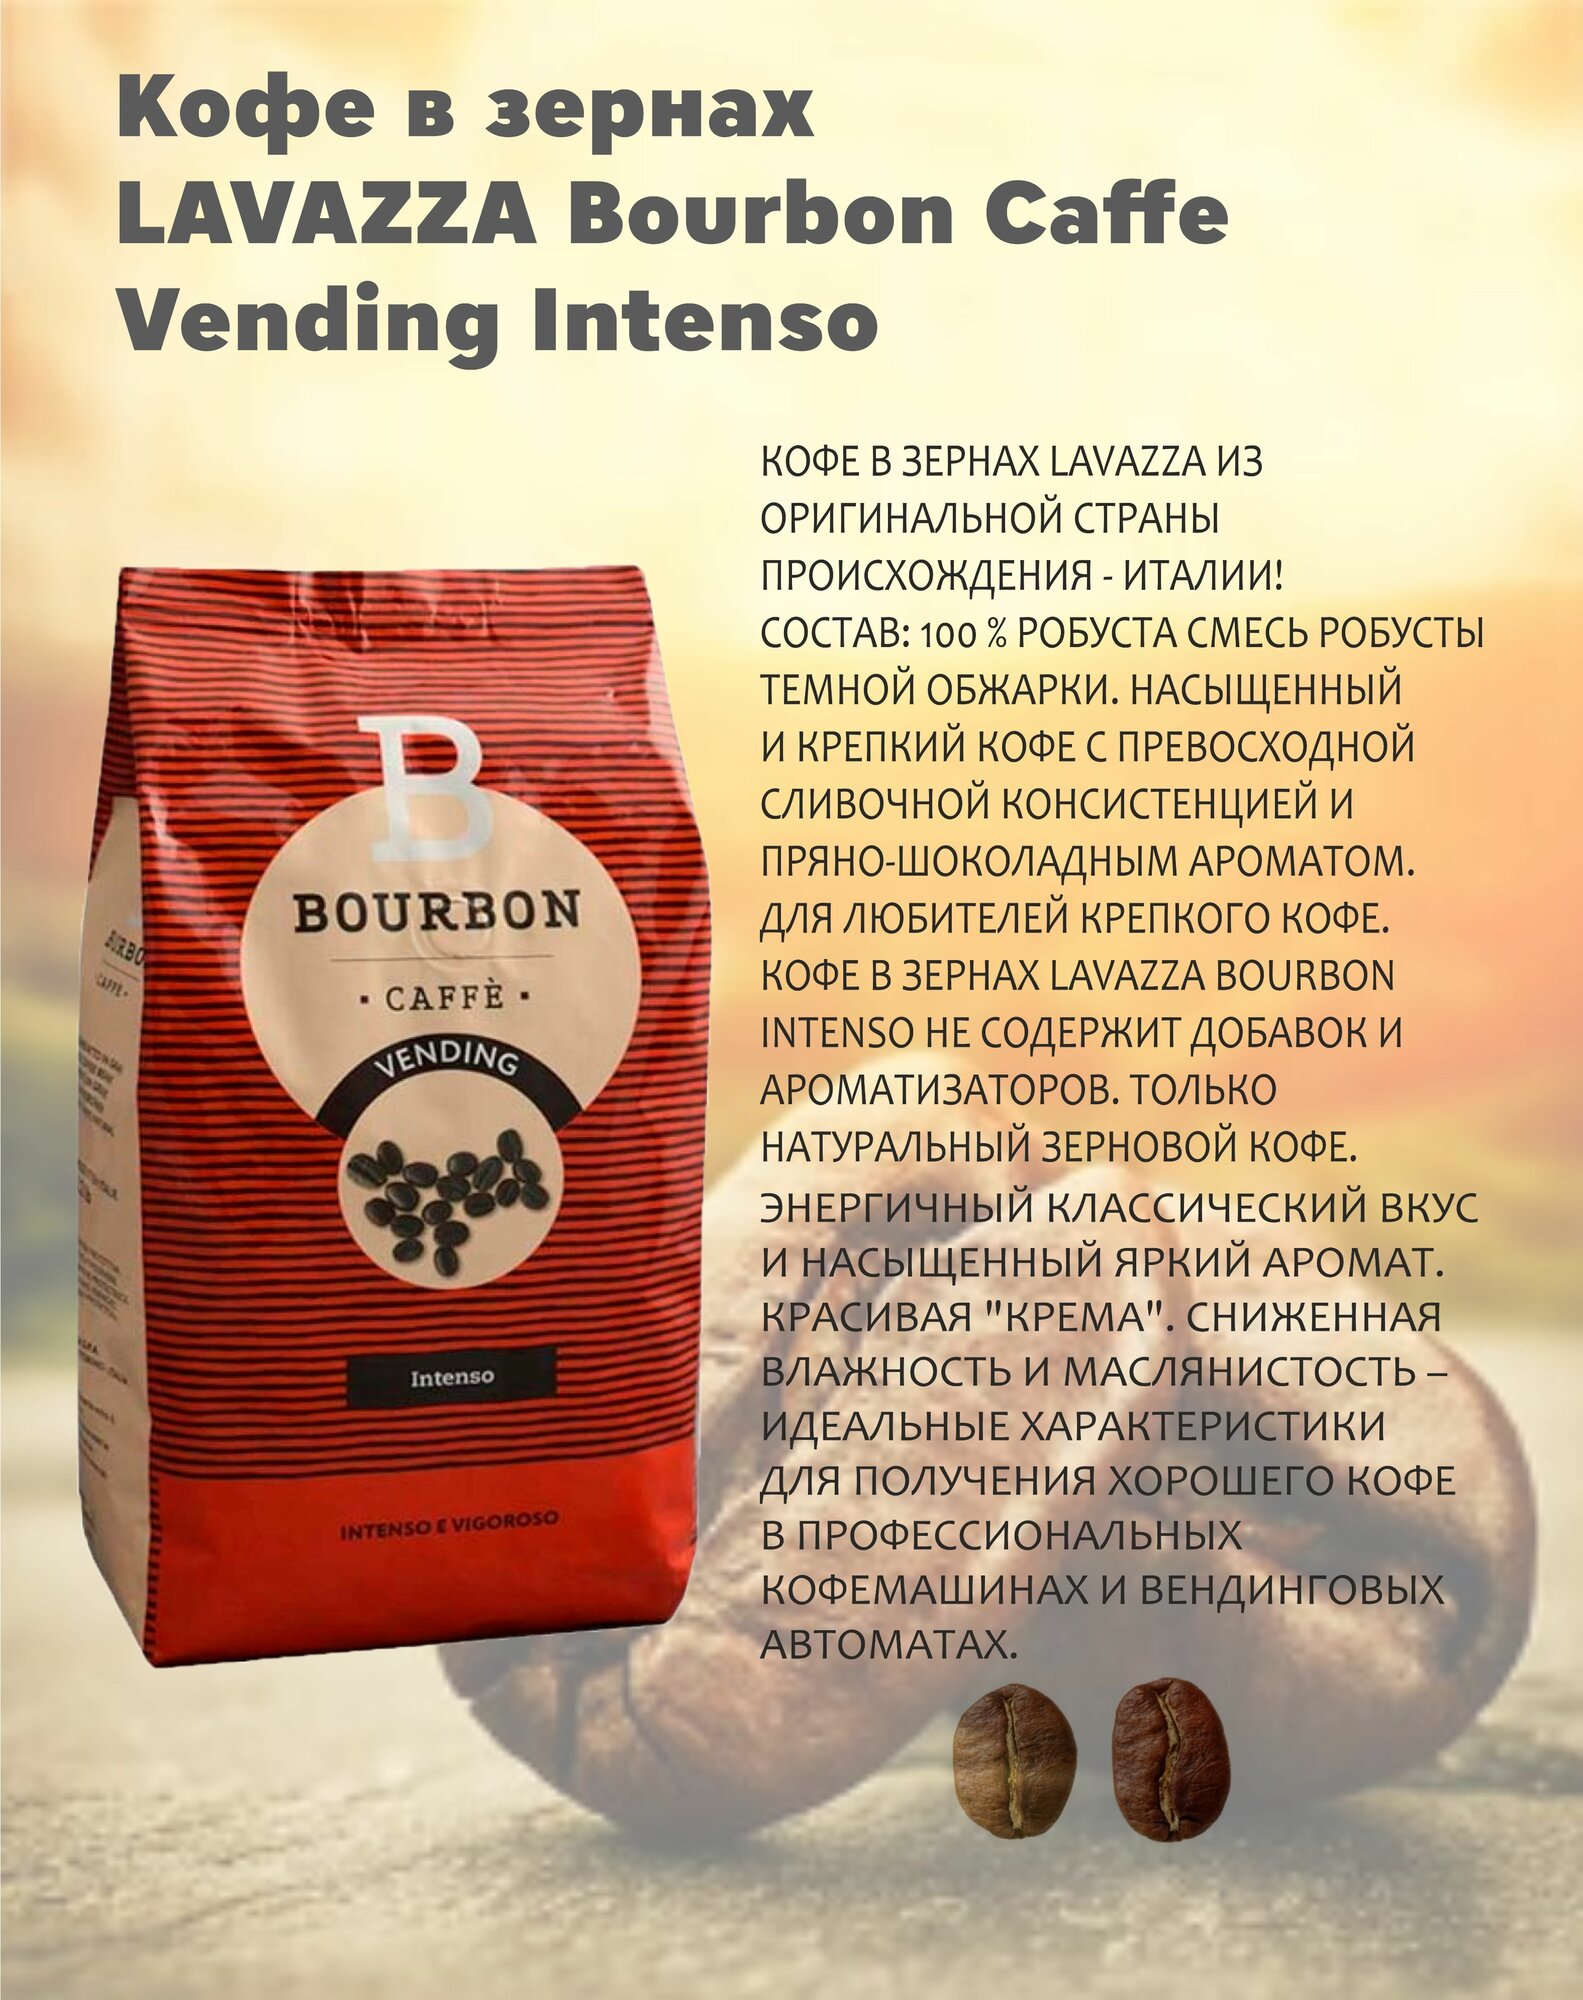 Кофе в зернах Lavazza Bourbon Intenso, пряности, шоколад, 1 кг